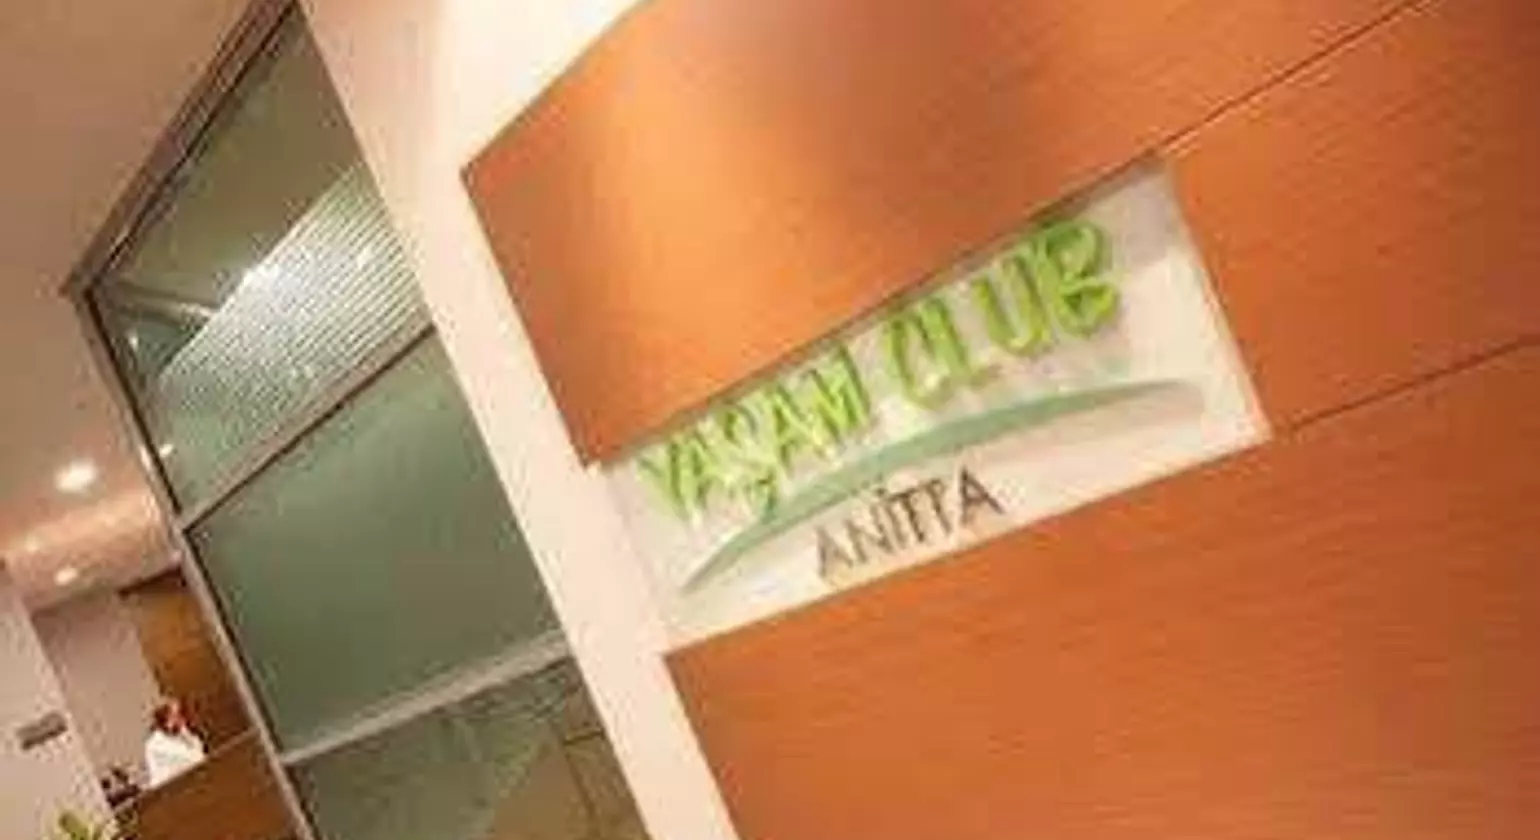 Anitta Hotel